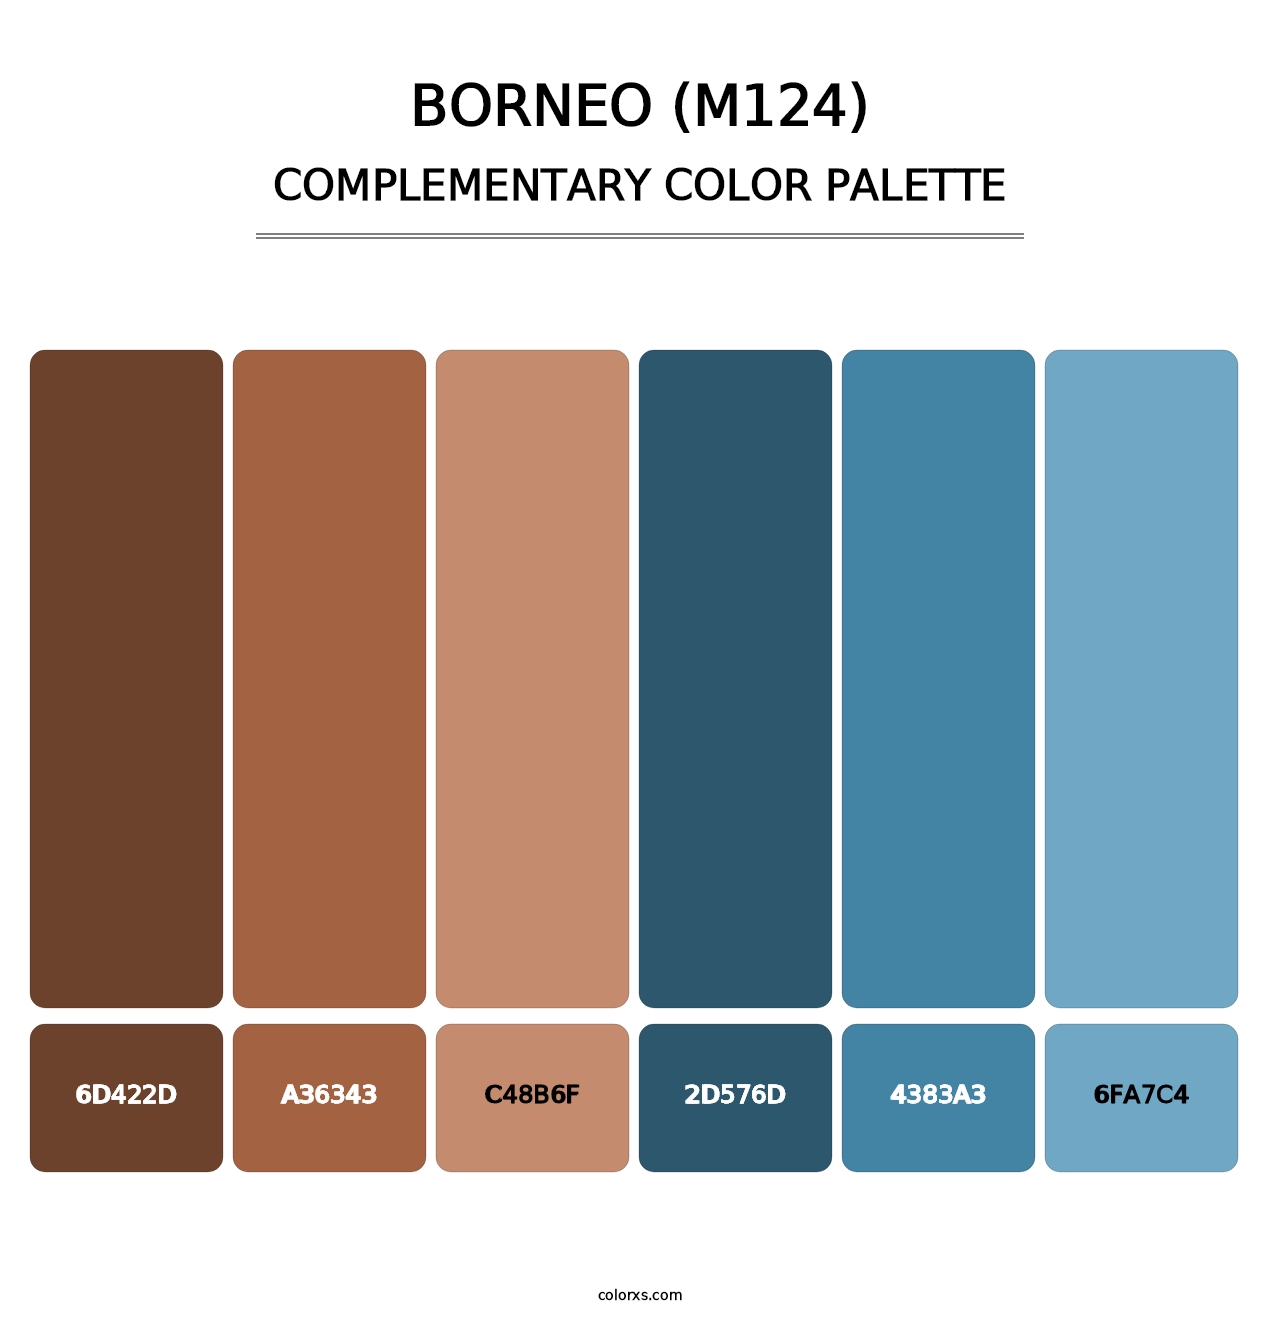 Borneo (M124) - Complementary Color Palette